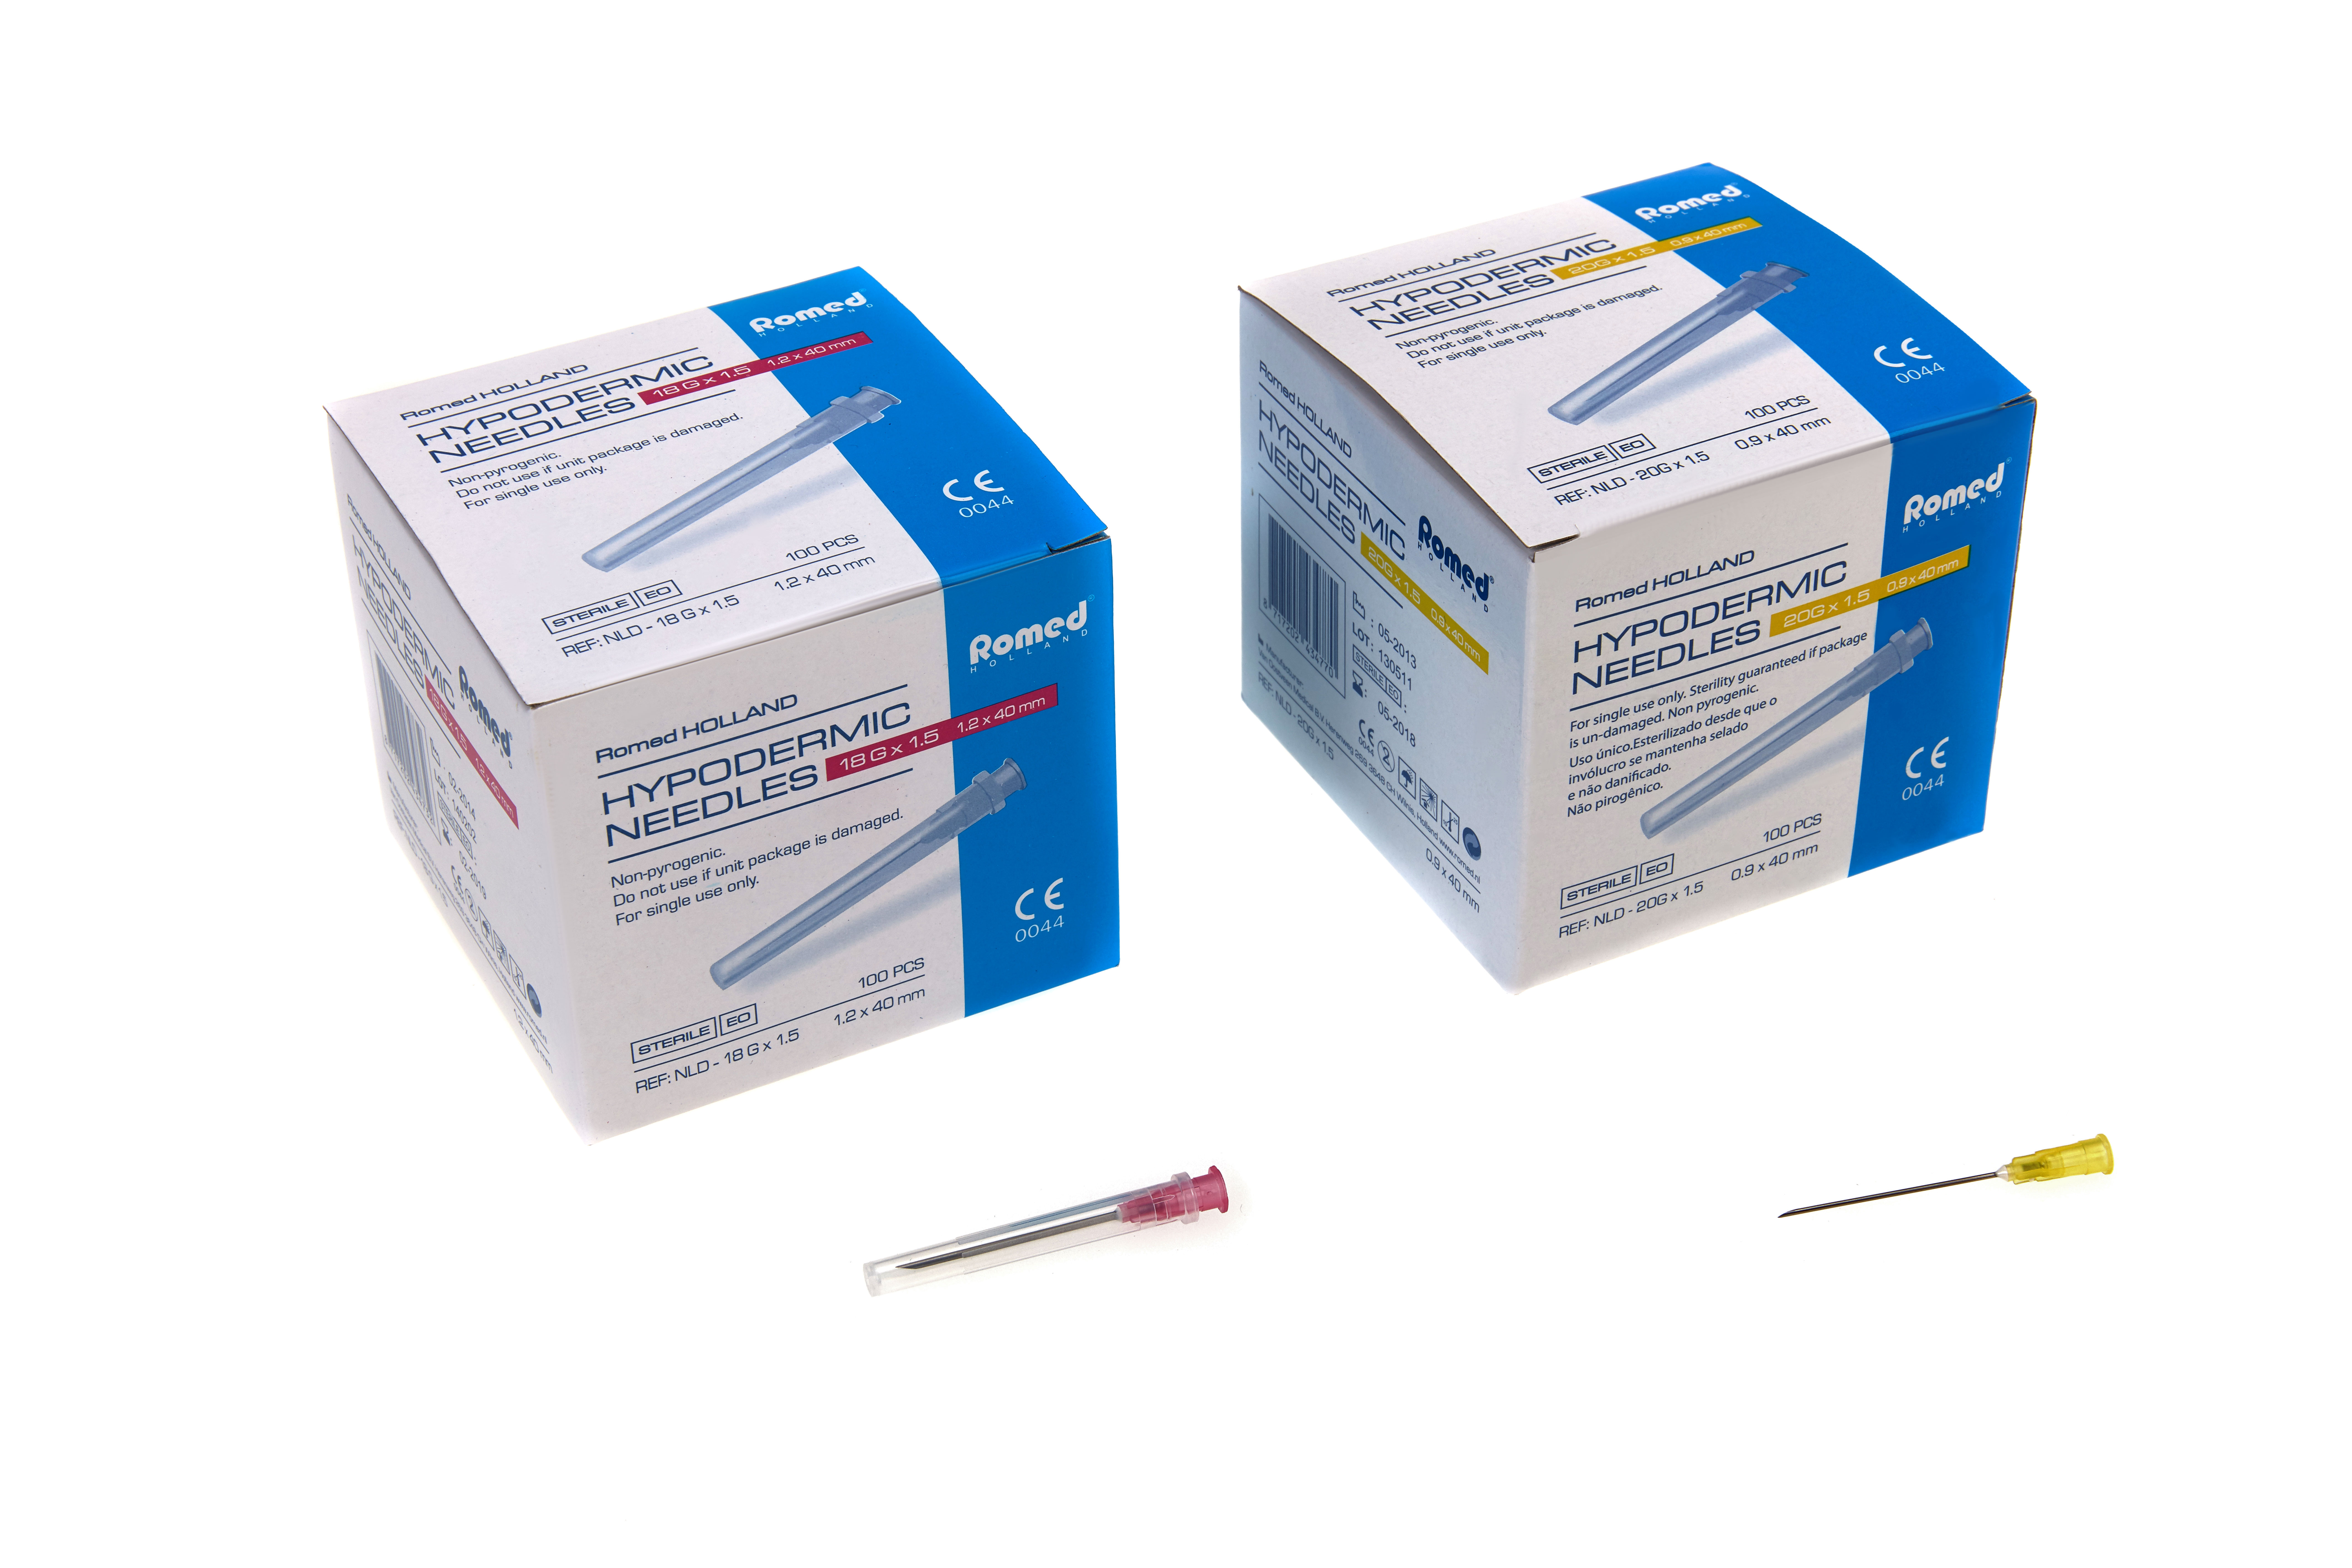 NLD-26GX0.5 Romed hypodermic needles, 26gx0.5", sterile per piece, 100 pcs in an inner box, 50 x 100 pcs = 5.000 pcs in a carton.